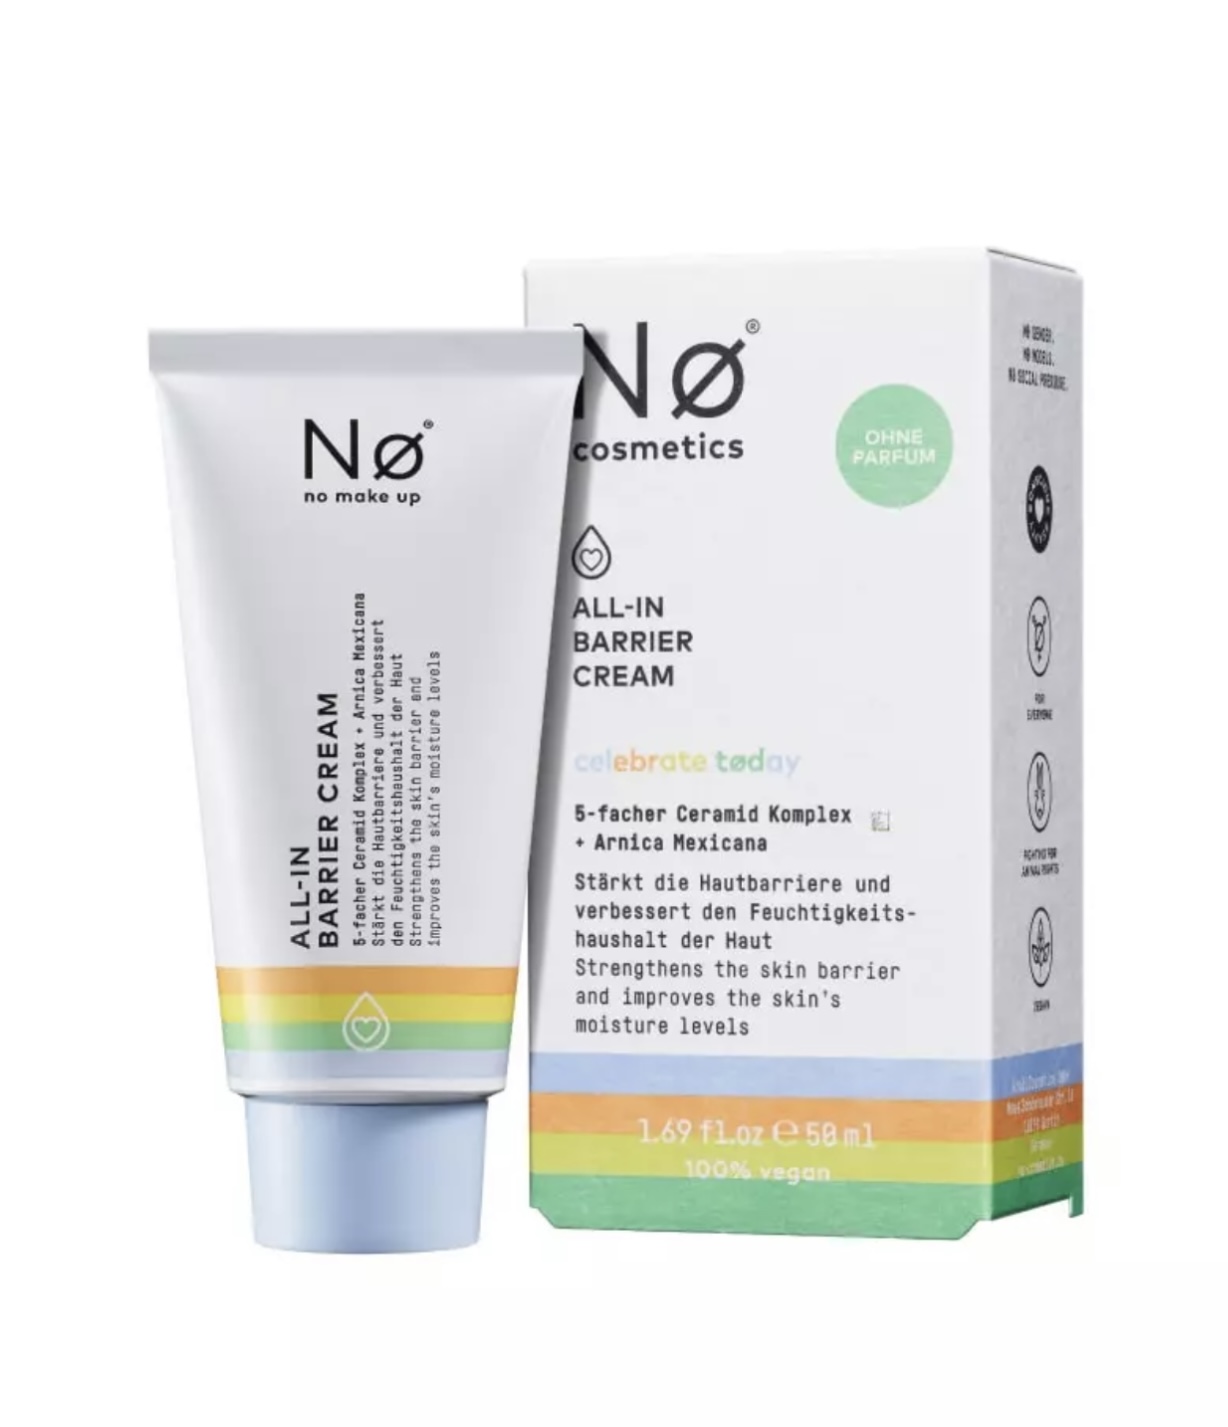 Nø Cosmetics Celebrate Today All-In Barrier Cream 50 ml